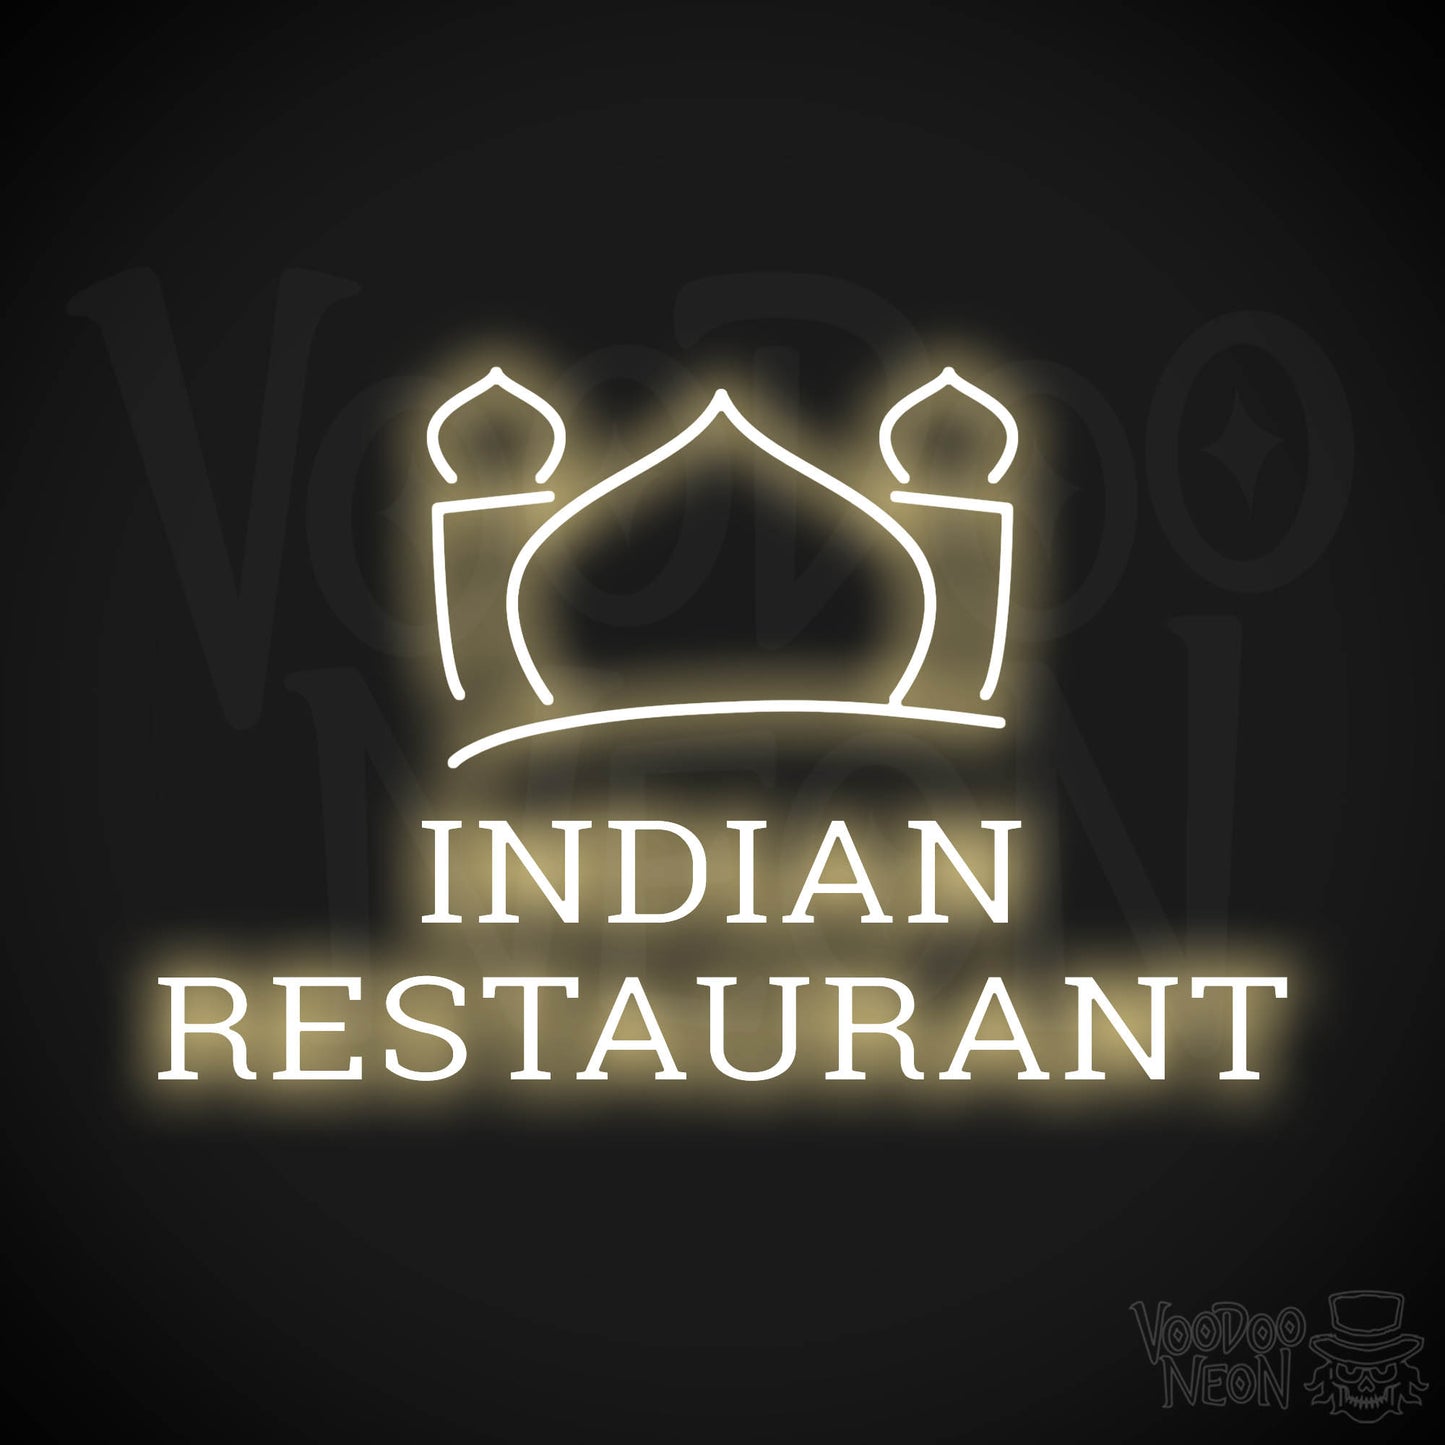 Indian Restaurant LED Neon - Warm White